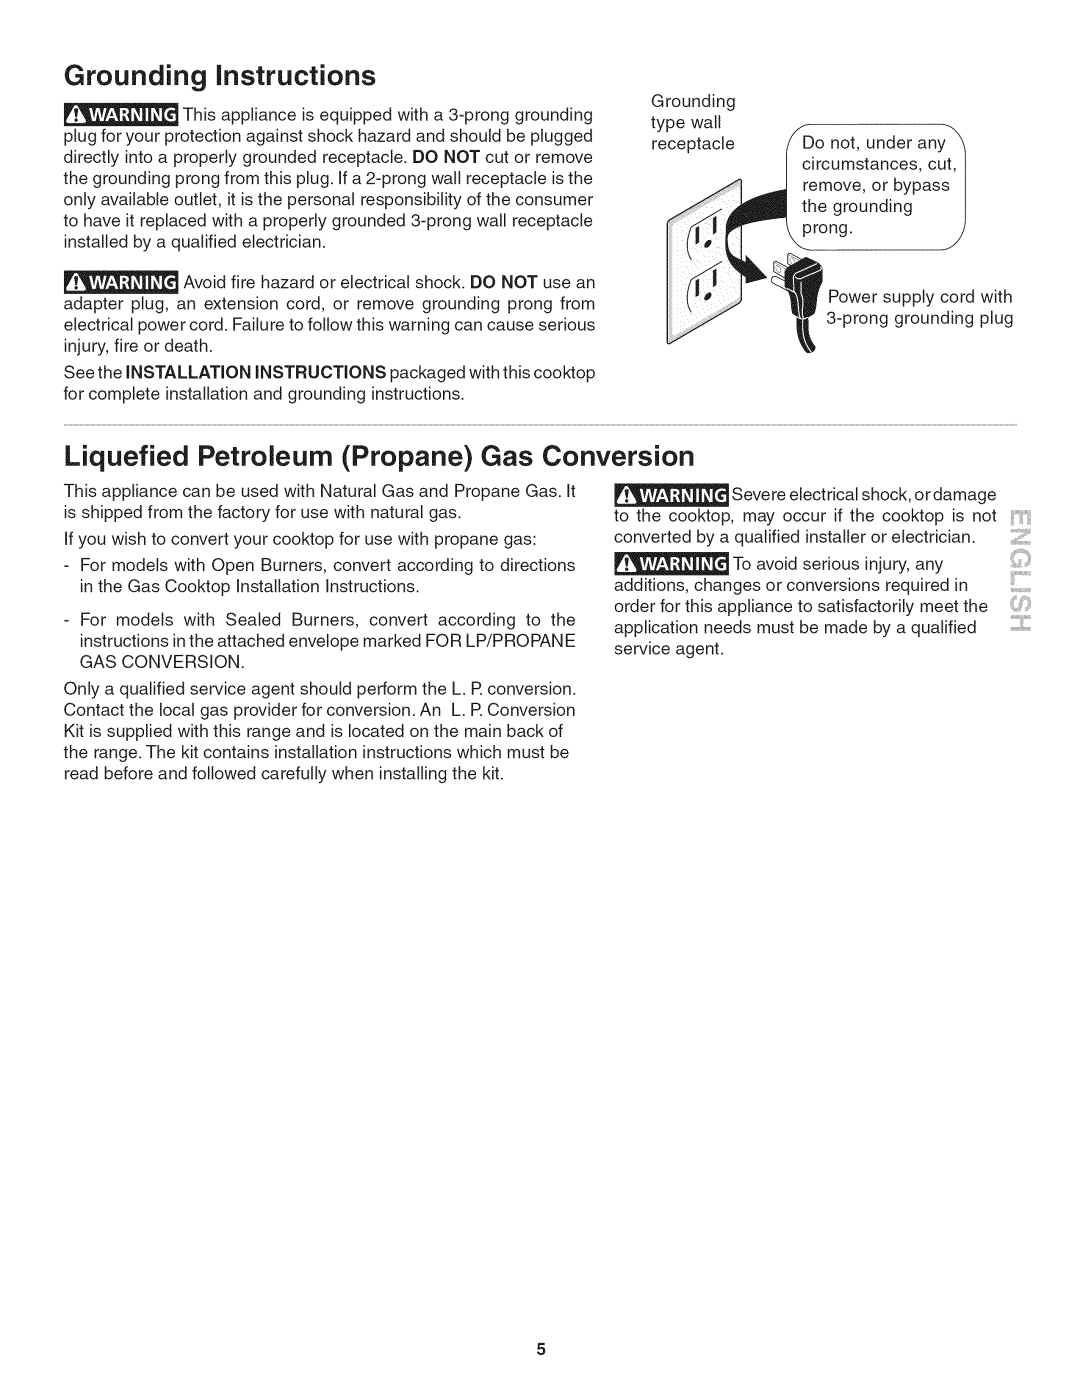 Kenmore 790.324, 3241 manual Grounding instructions, Liquefied Petroleum Propane Gas Conversion 